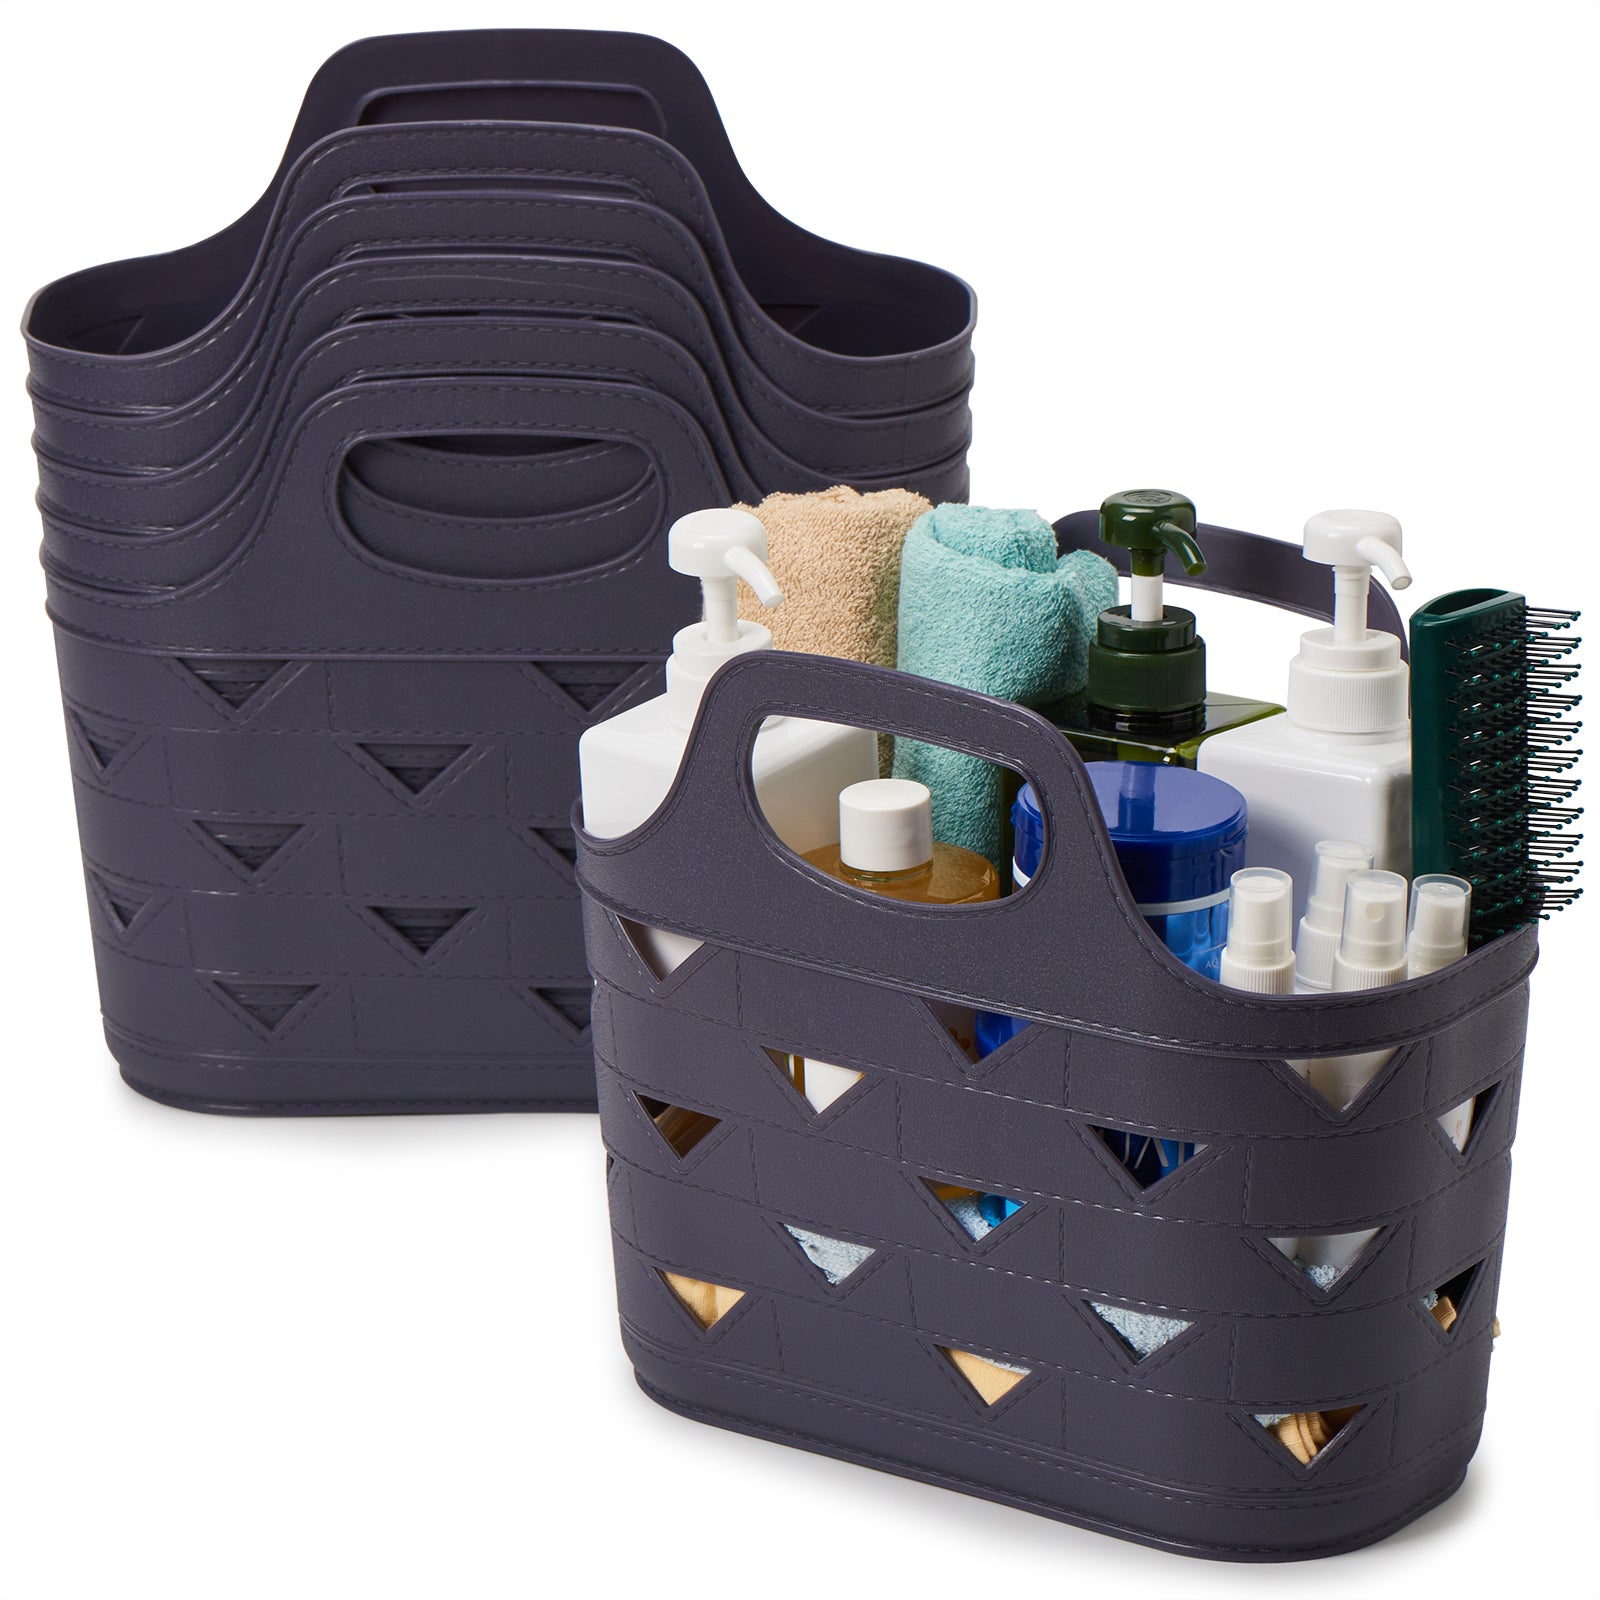 Set of 6 Plastic Storage Baskets, Small Kitchen Pantry Organizer Basket Bins